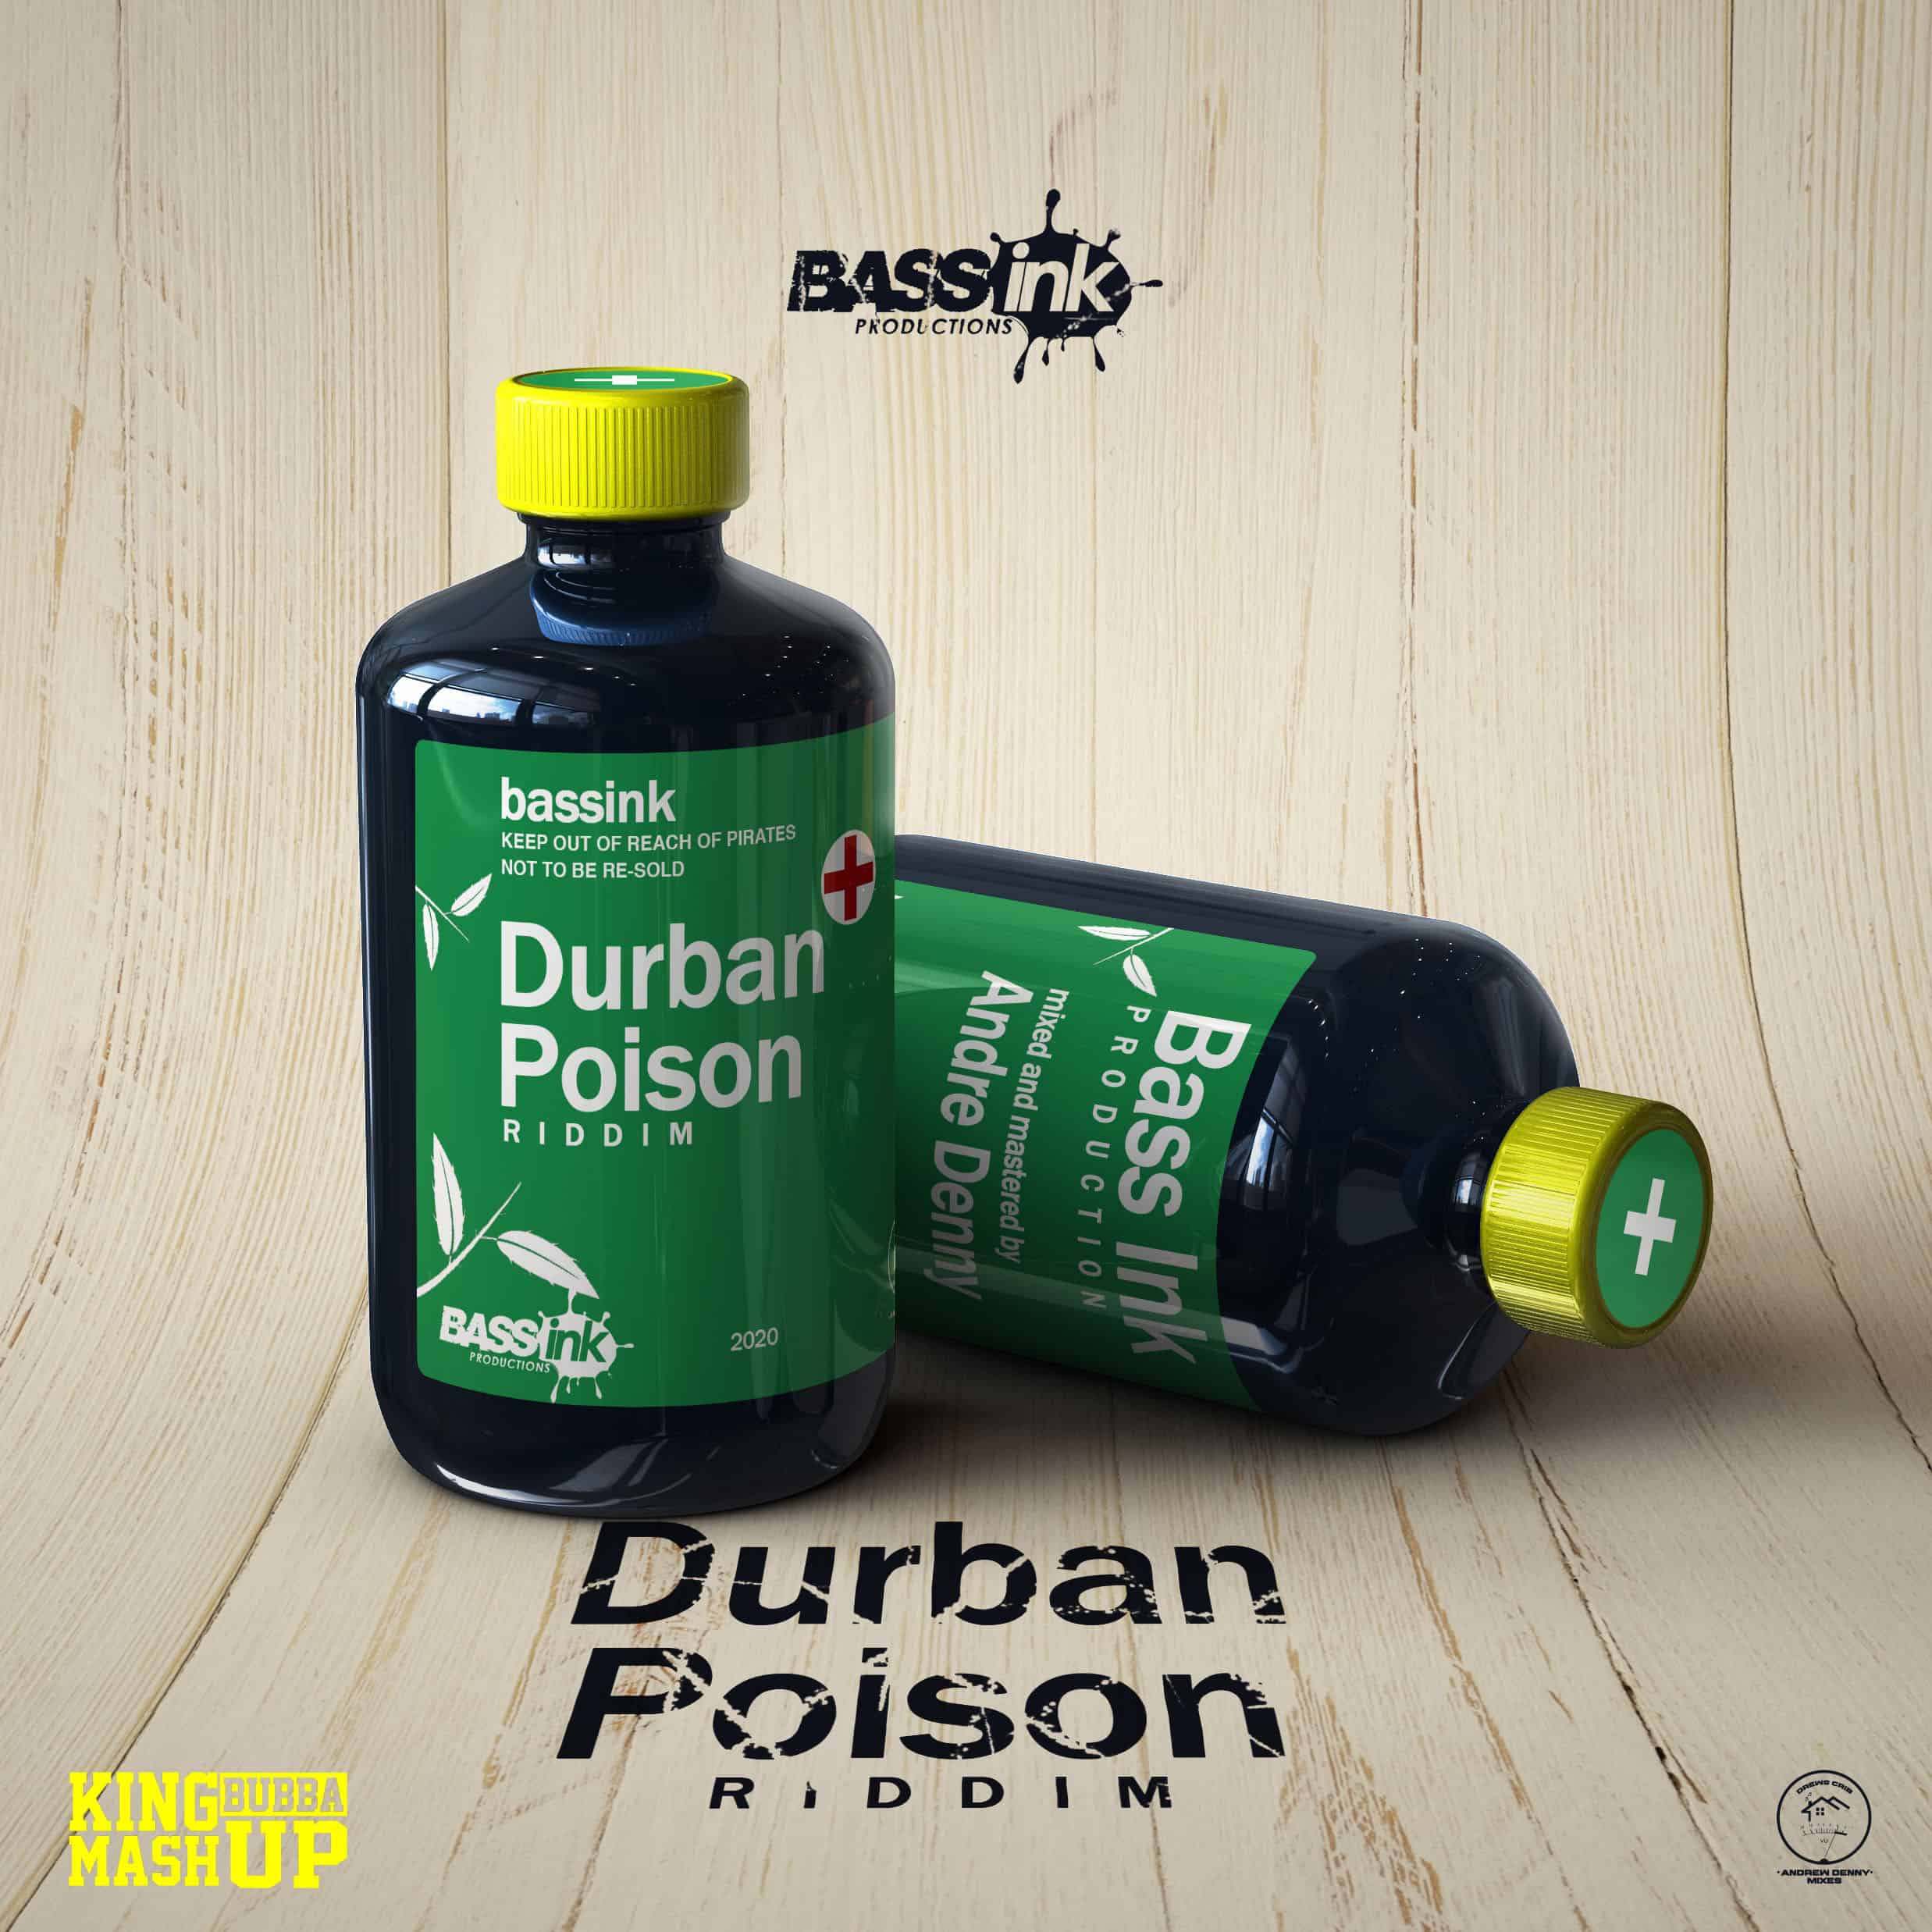 Durban Poison Riddim - Various Artists - Bass Ink